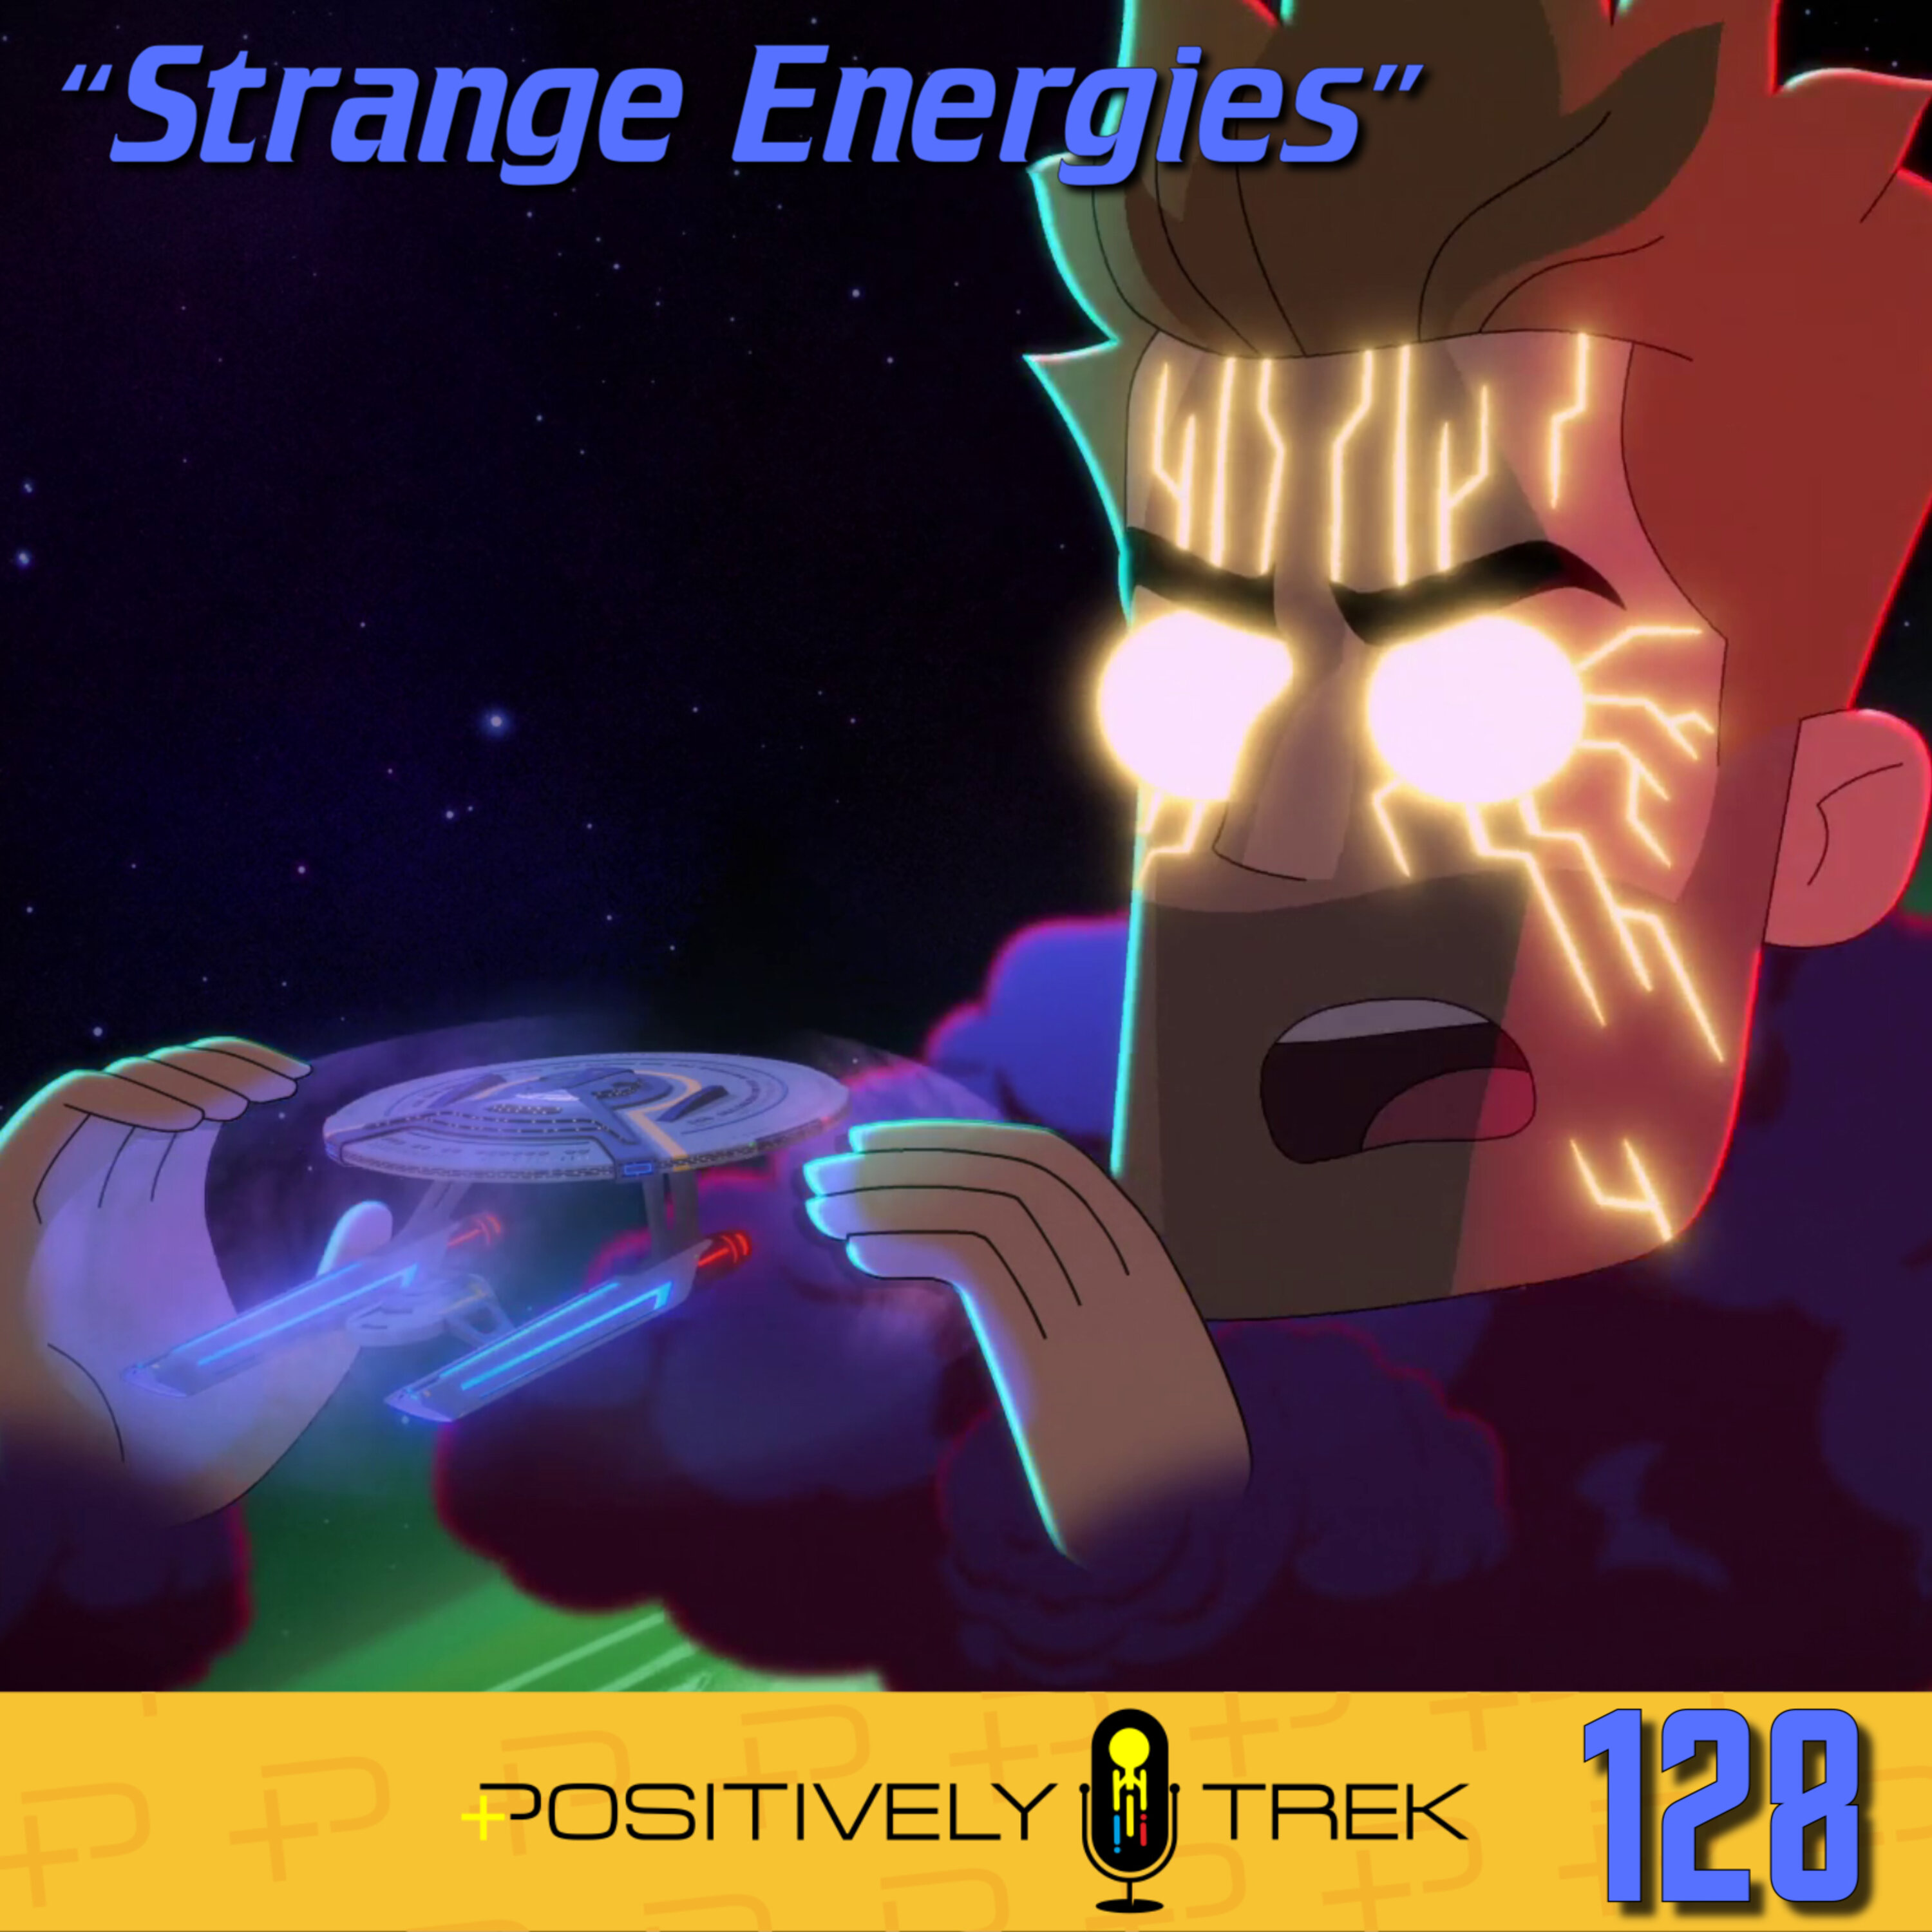 Lower Decks Review: “Strange Energies” (2.01) Image